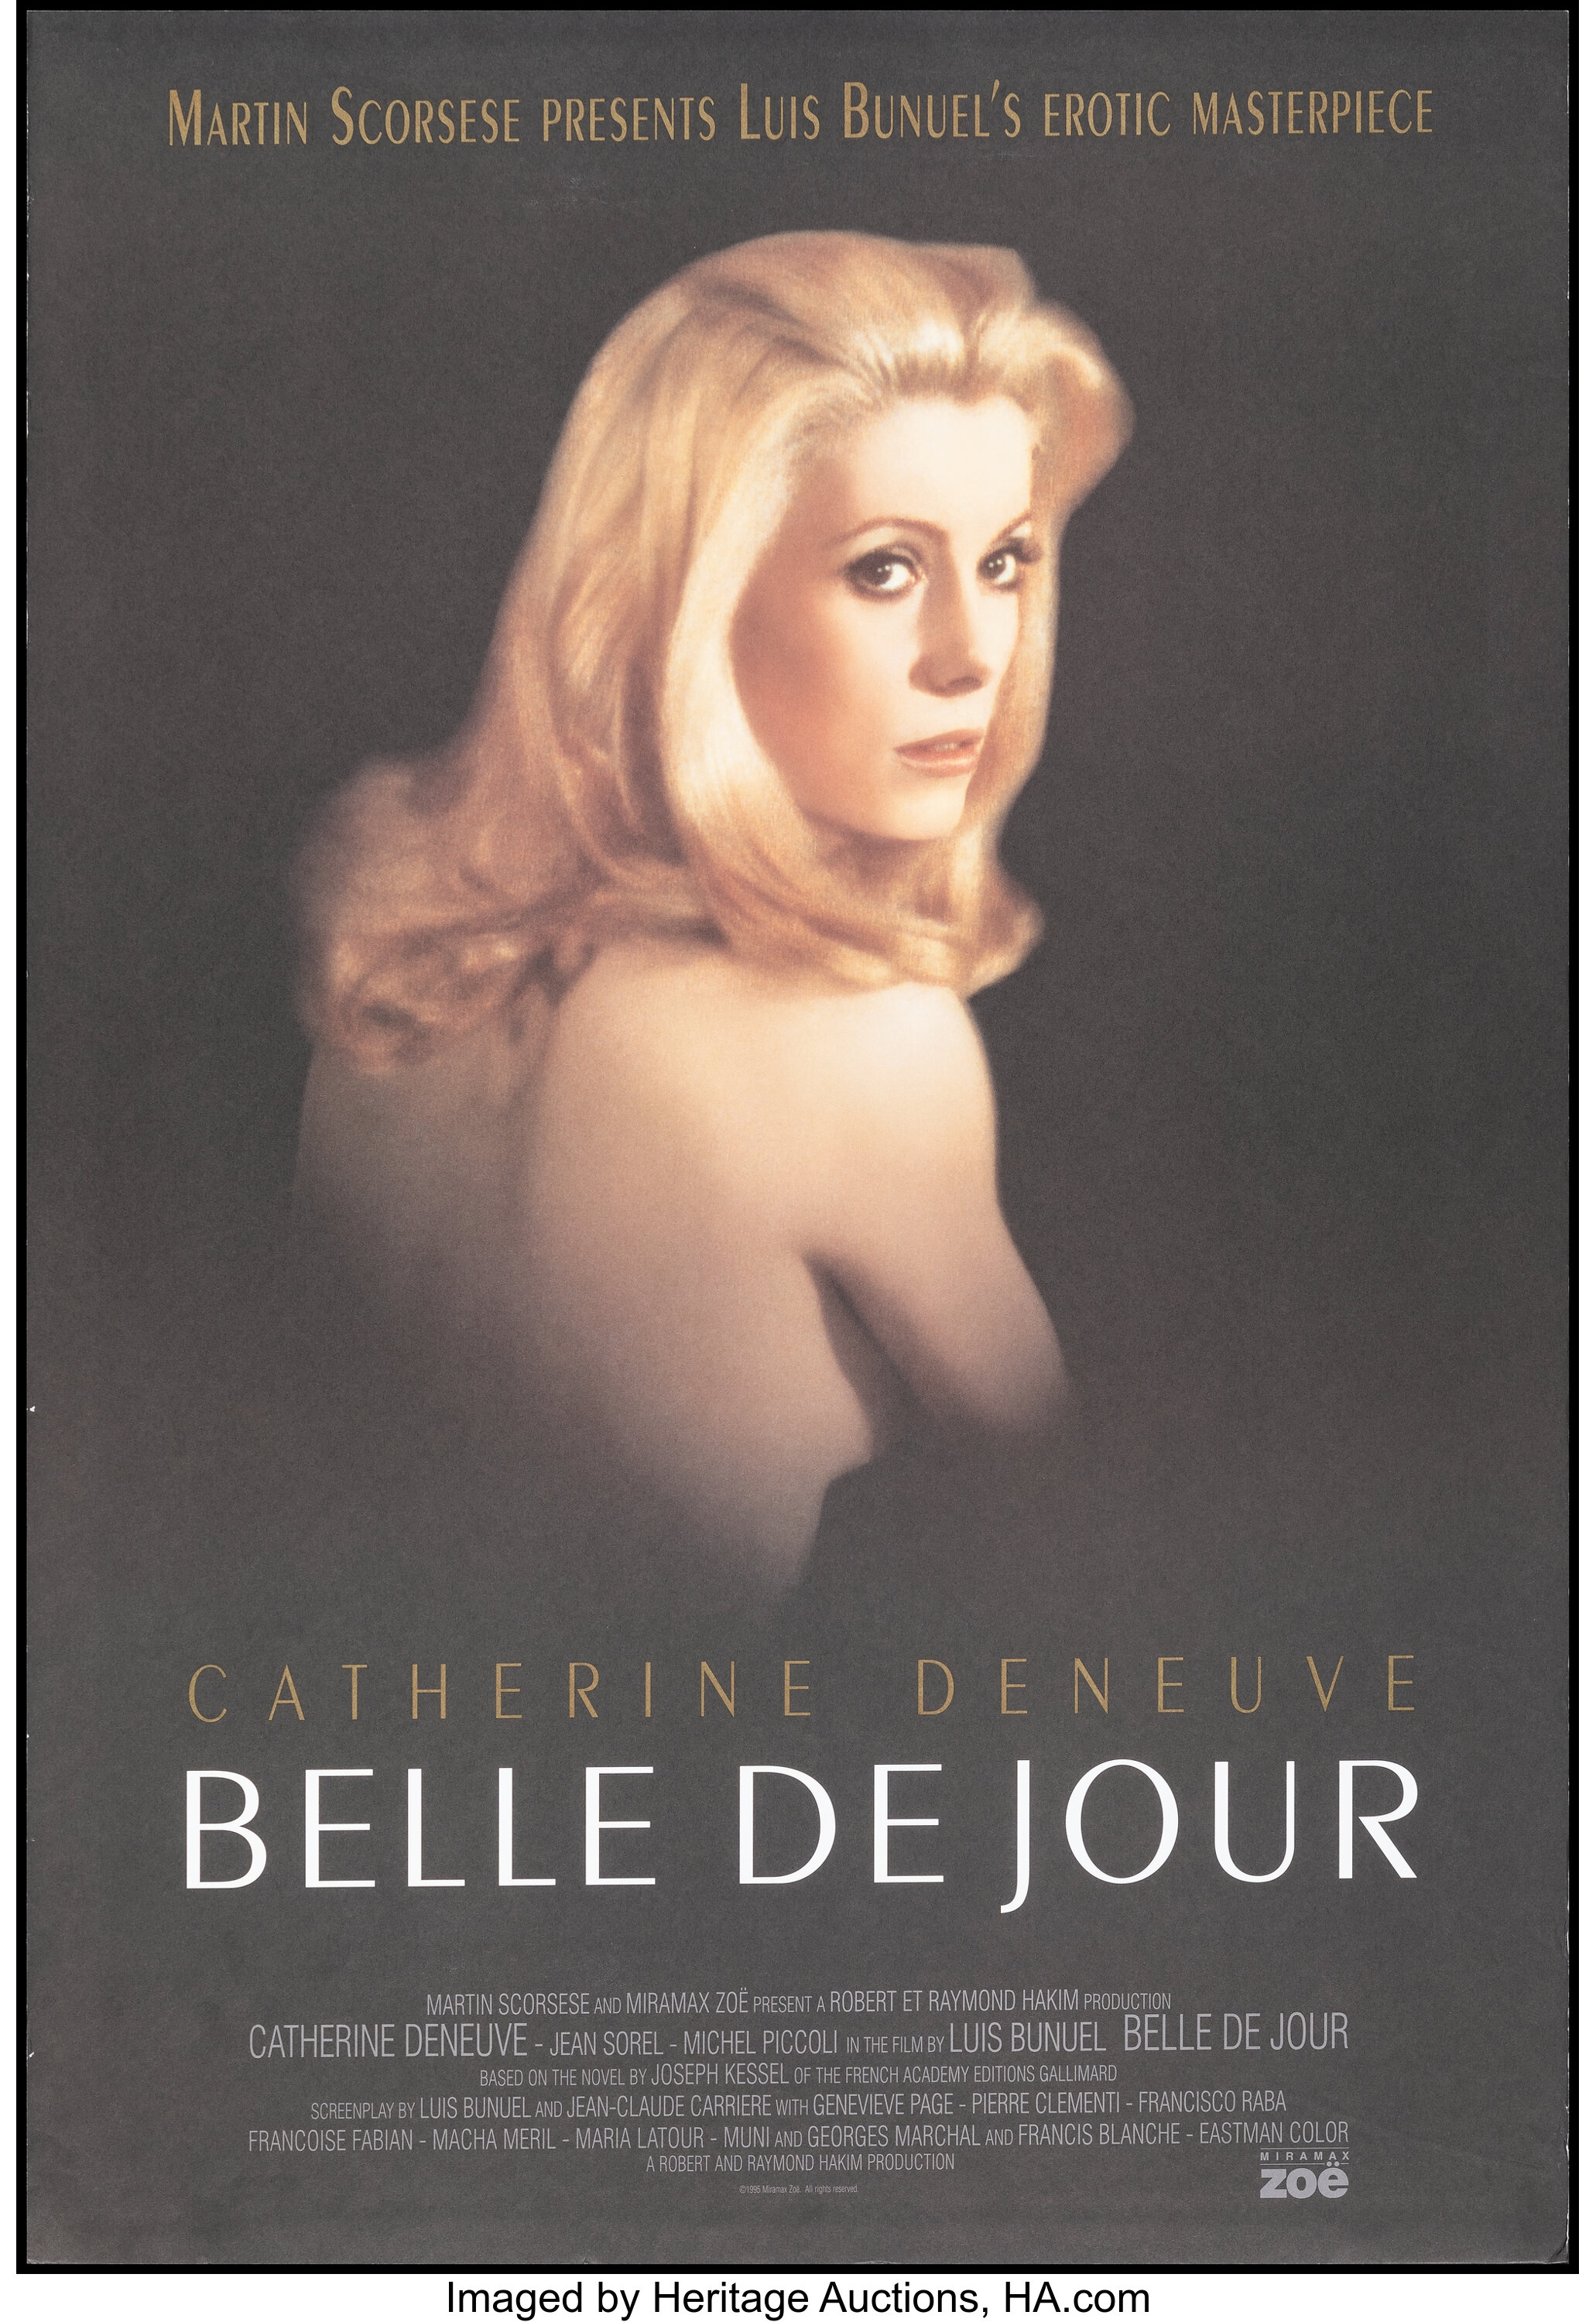  Belle de jour : Catherine Deneuve, Jean Sorel, Michel